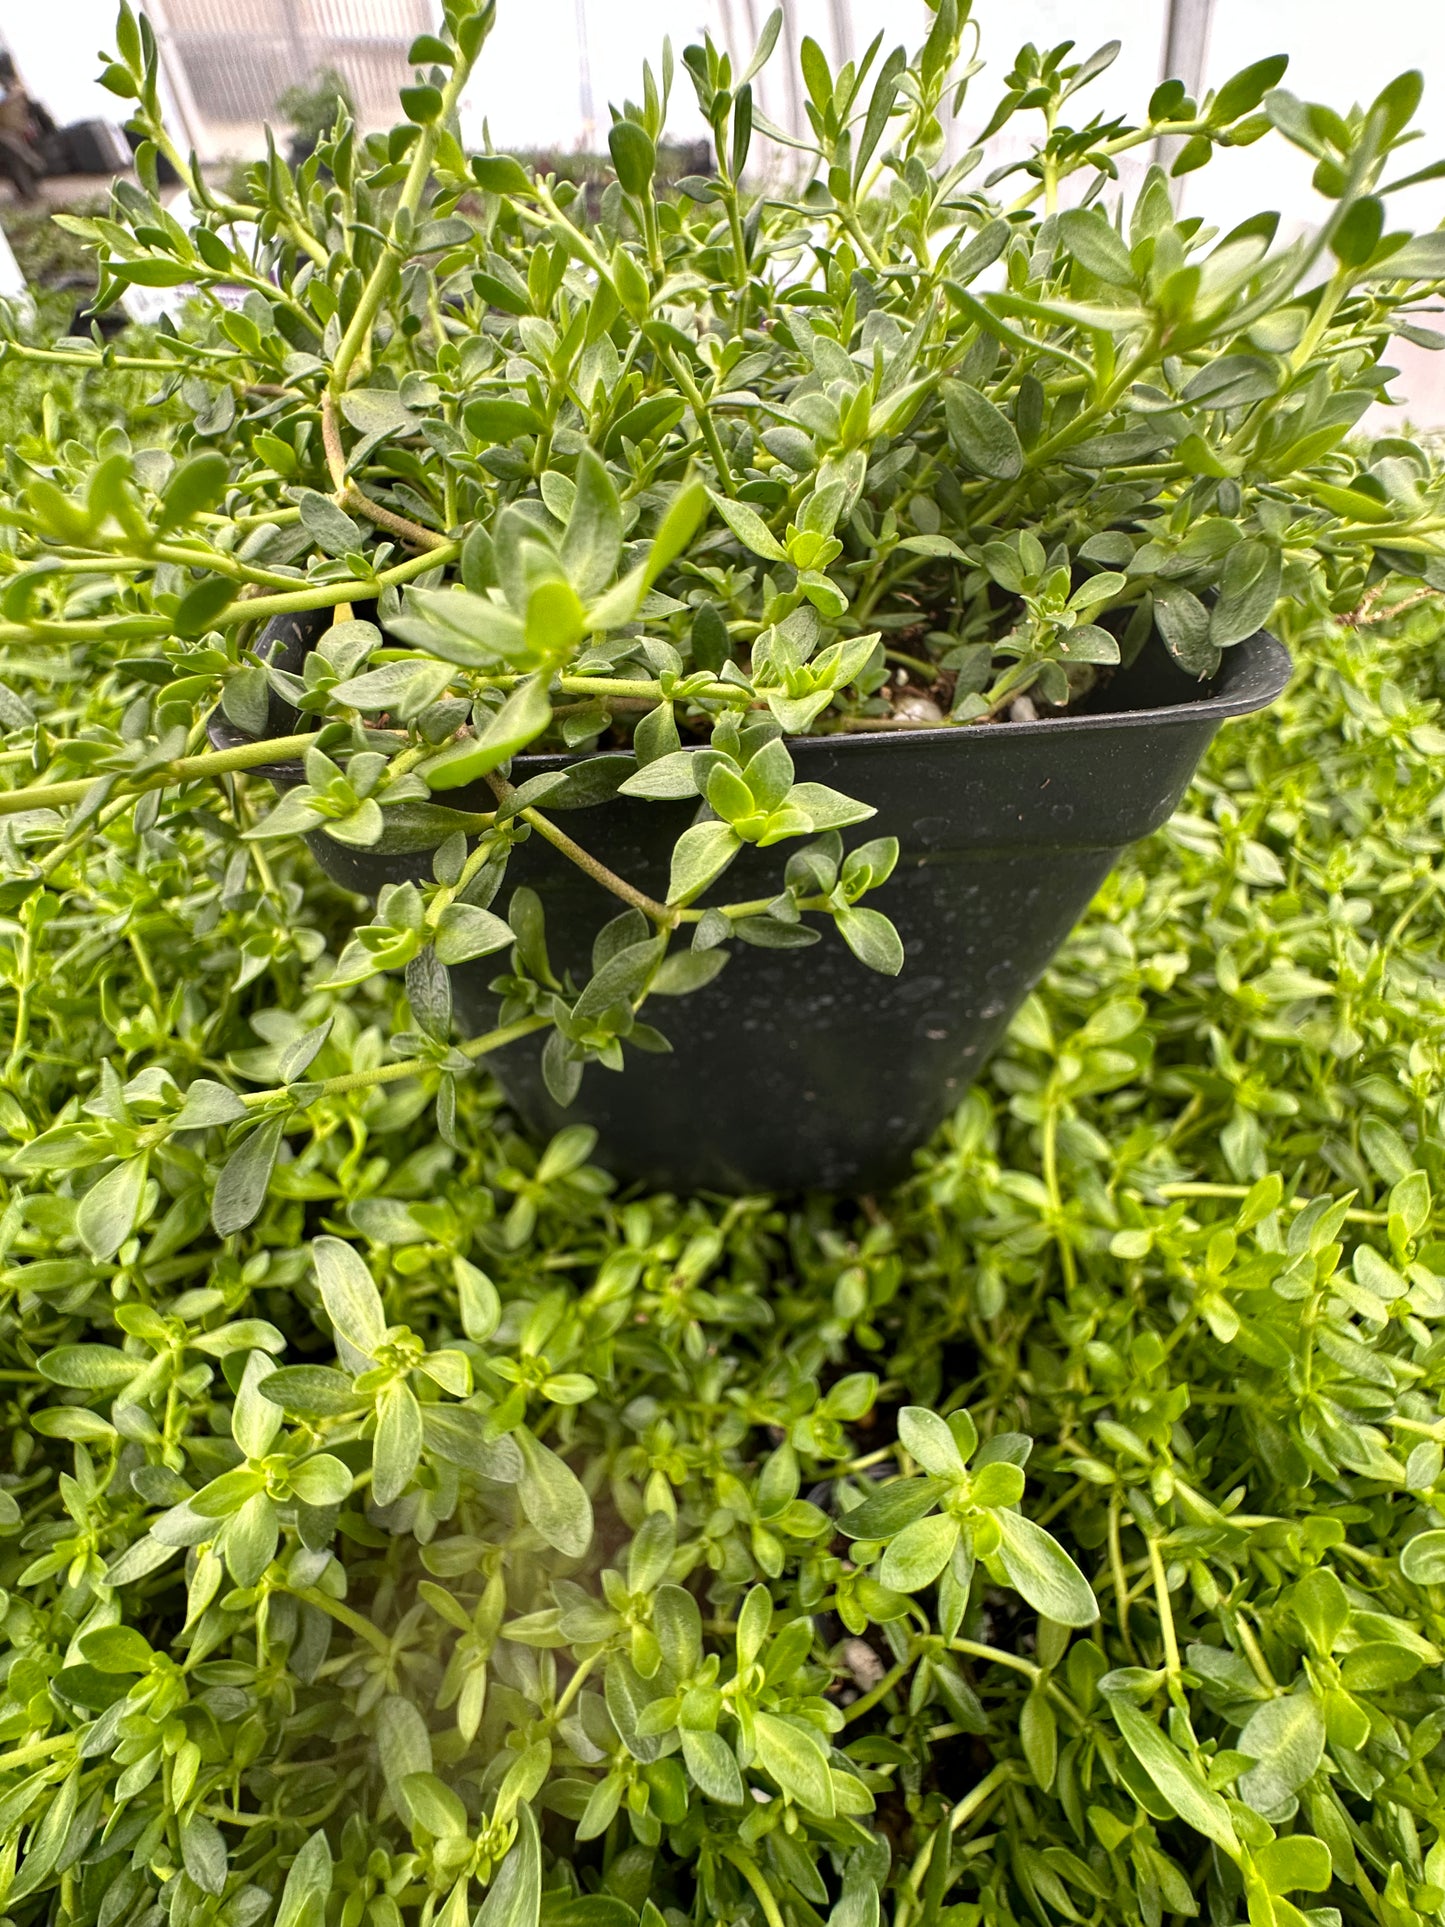 Herniaria glabra/ Rupturewort/ Green Carpet